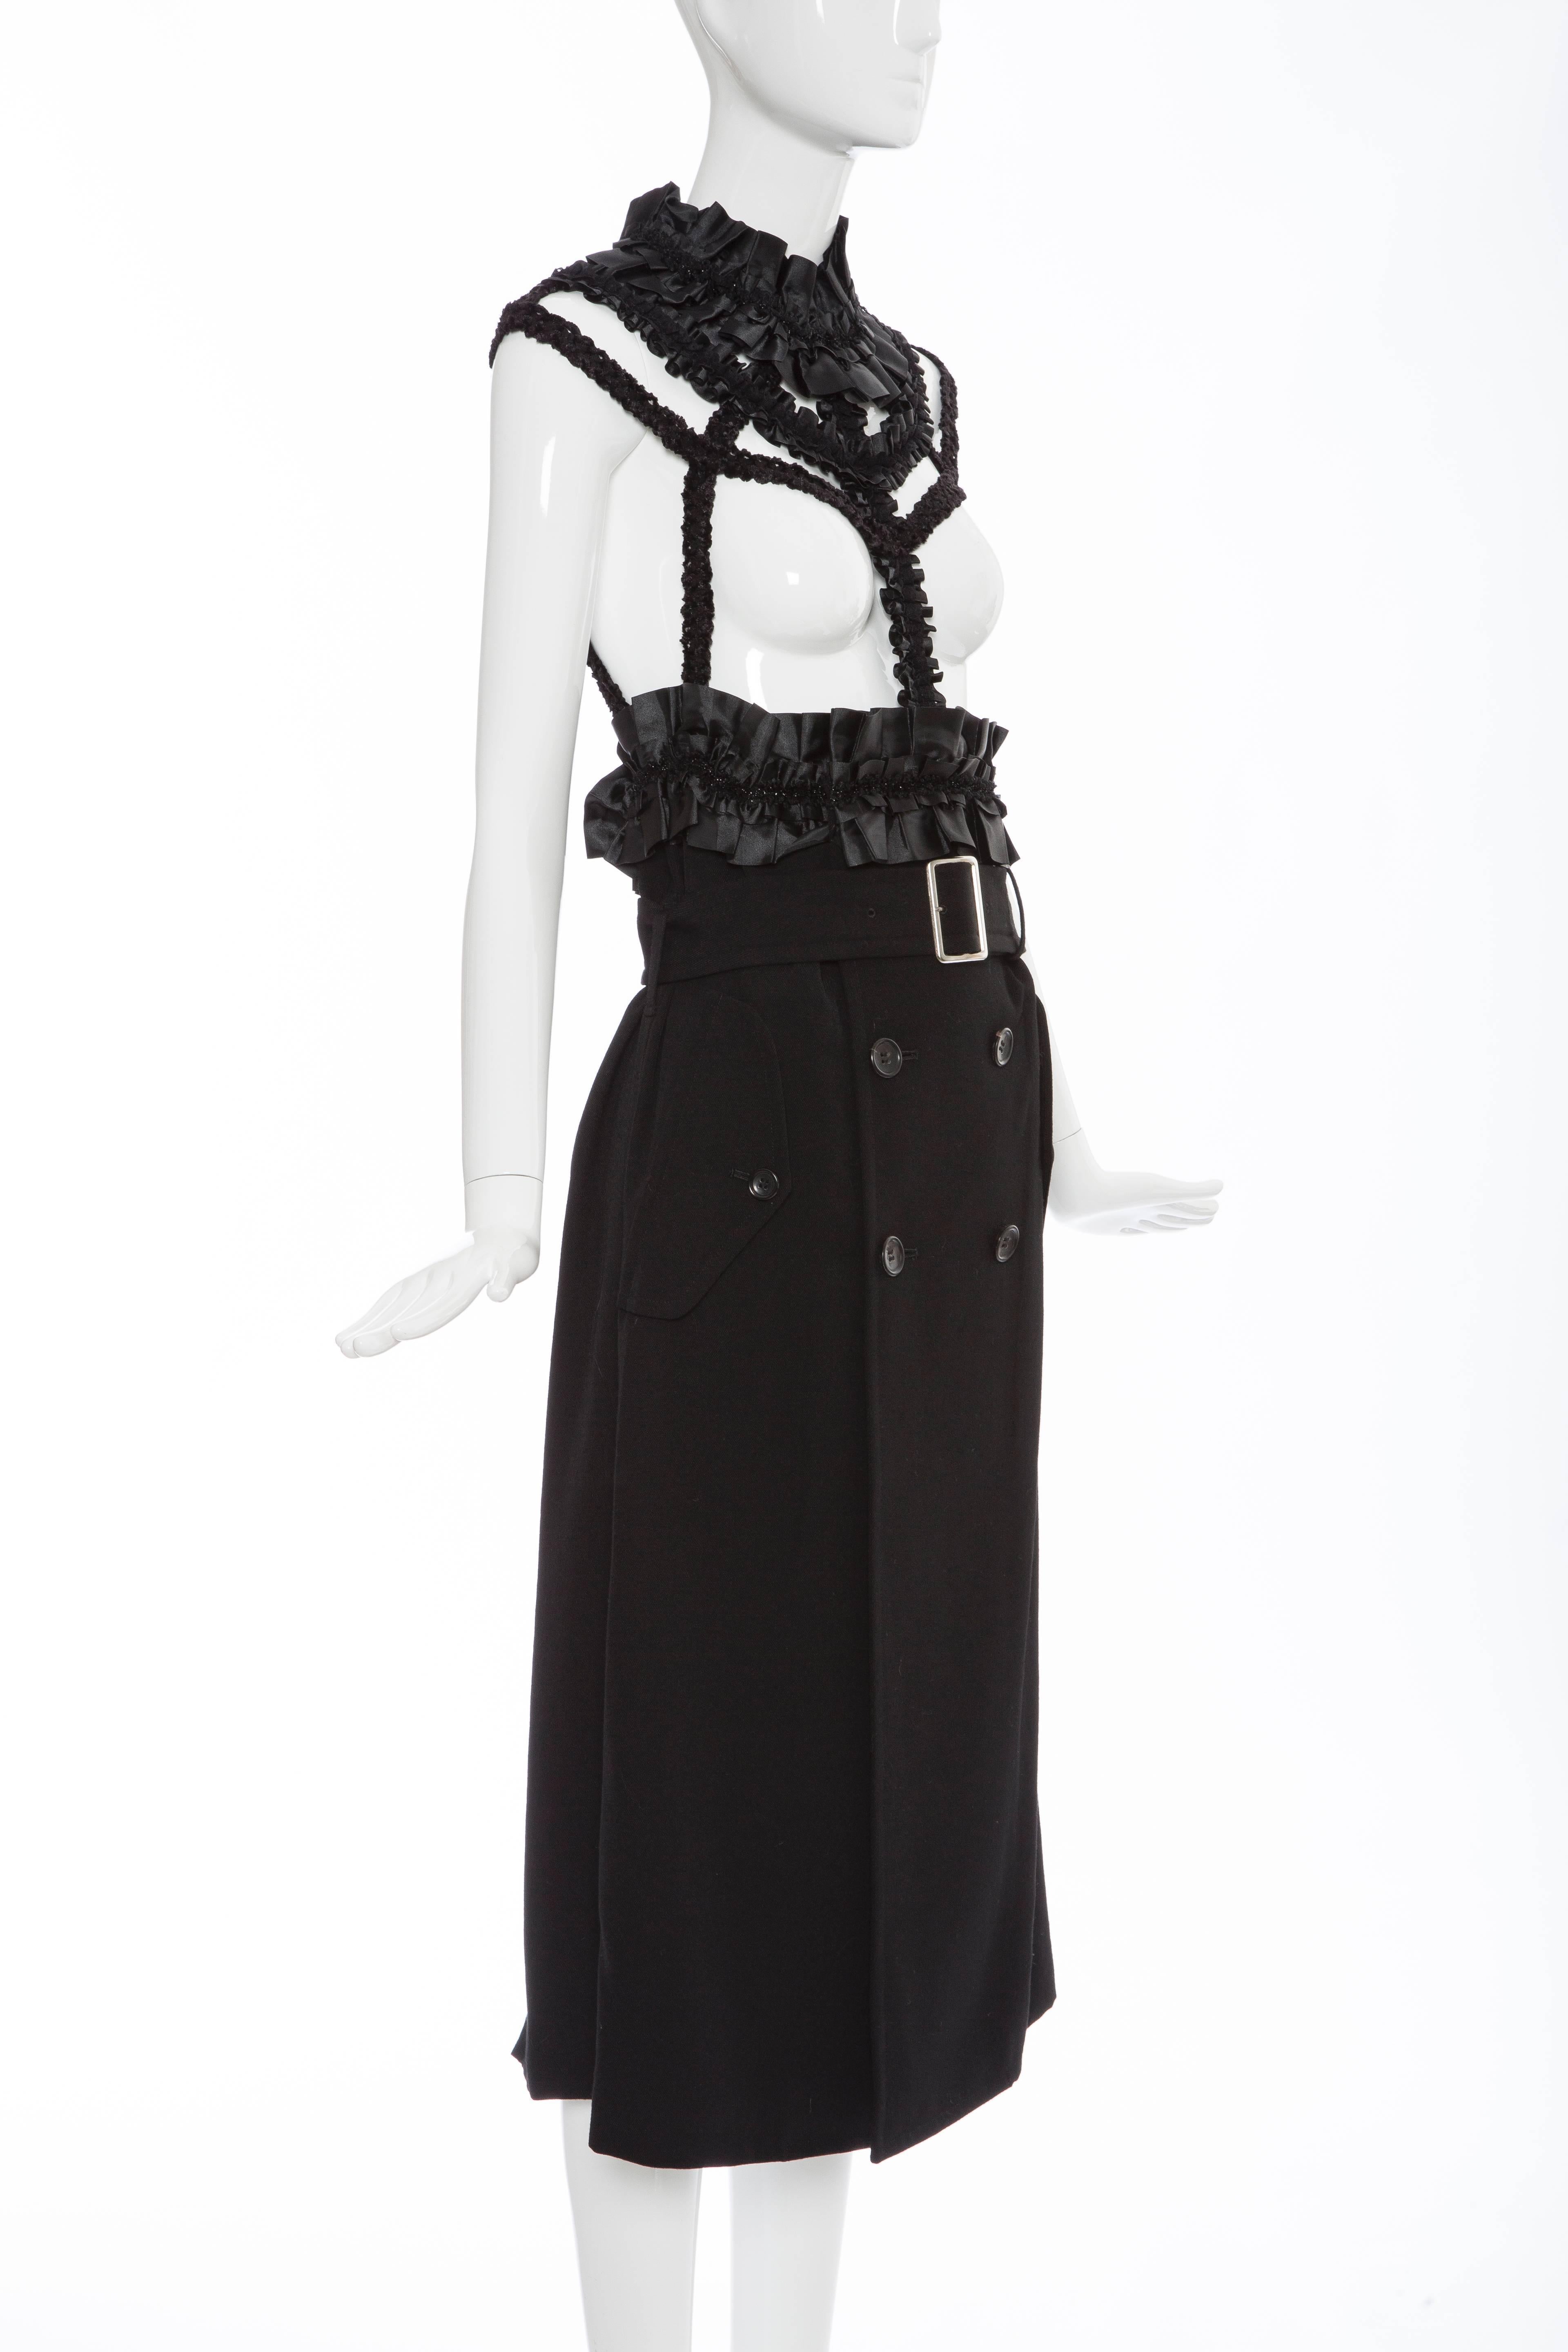 Comme des Garcons Black Wool & Satin Harness Dress, Autumn - Winter 2008 1